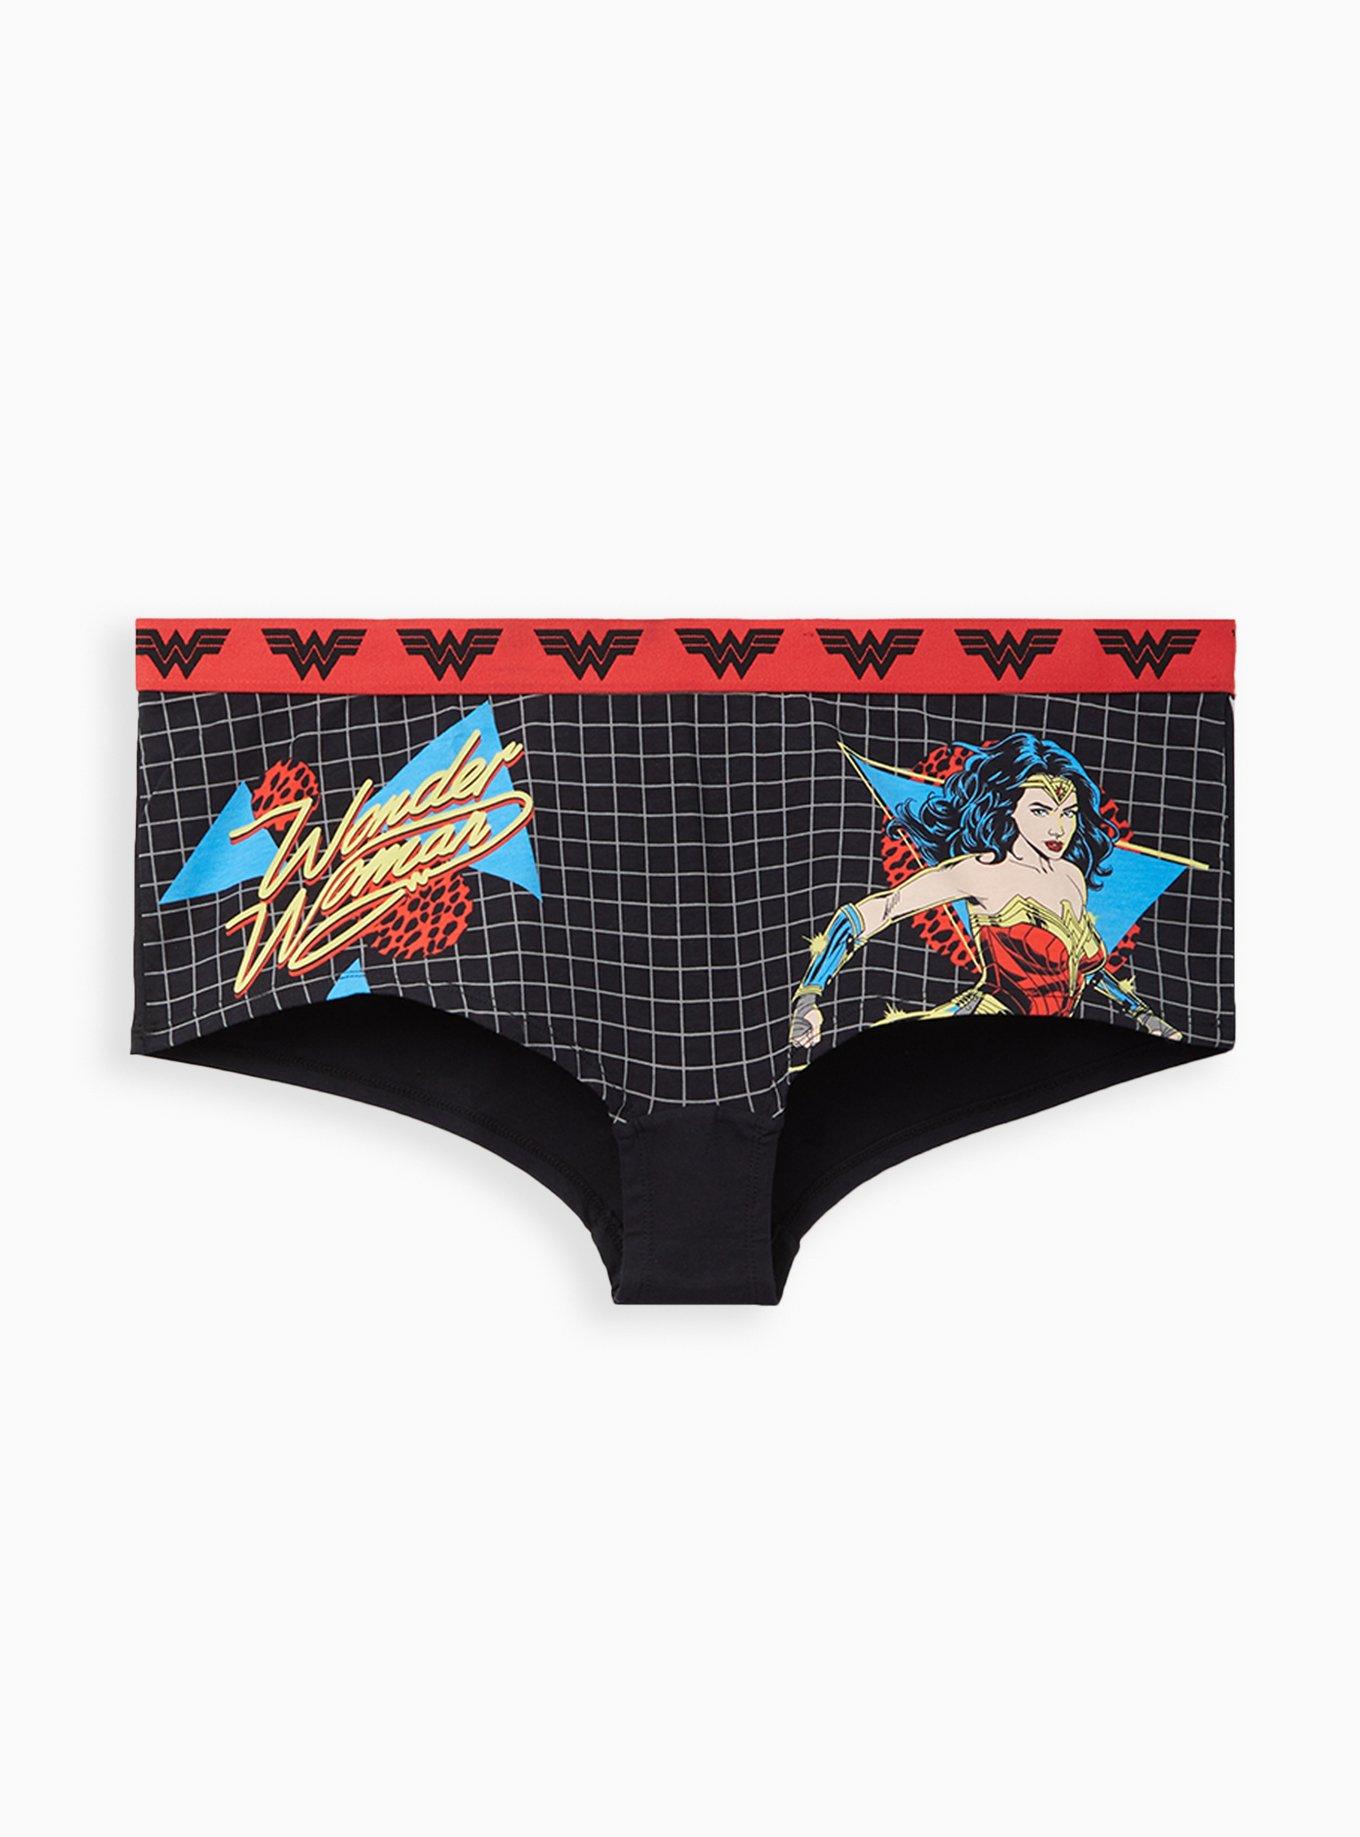 Plus Size - Wonder Woman Black & Pink Cotton Boyshort Panty - Torrid